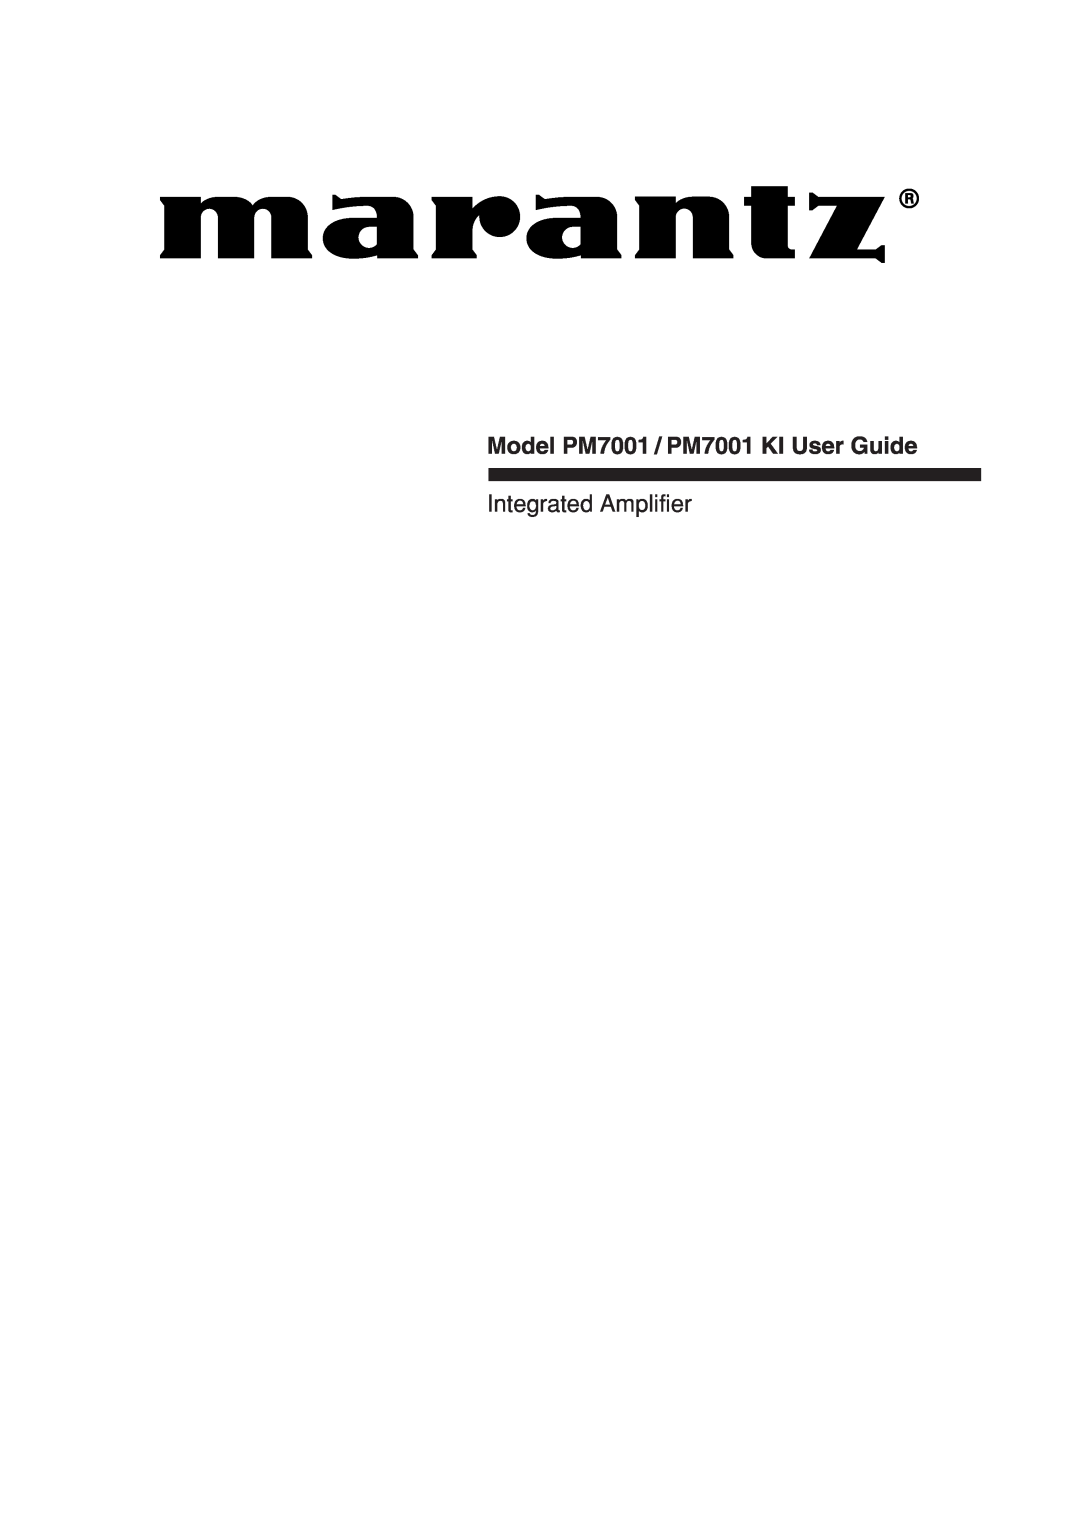 Marantz PM7001KI manual Model PM7001 / PM7001 KI User Guide, Integrated Amplifier 